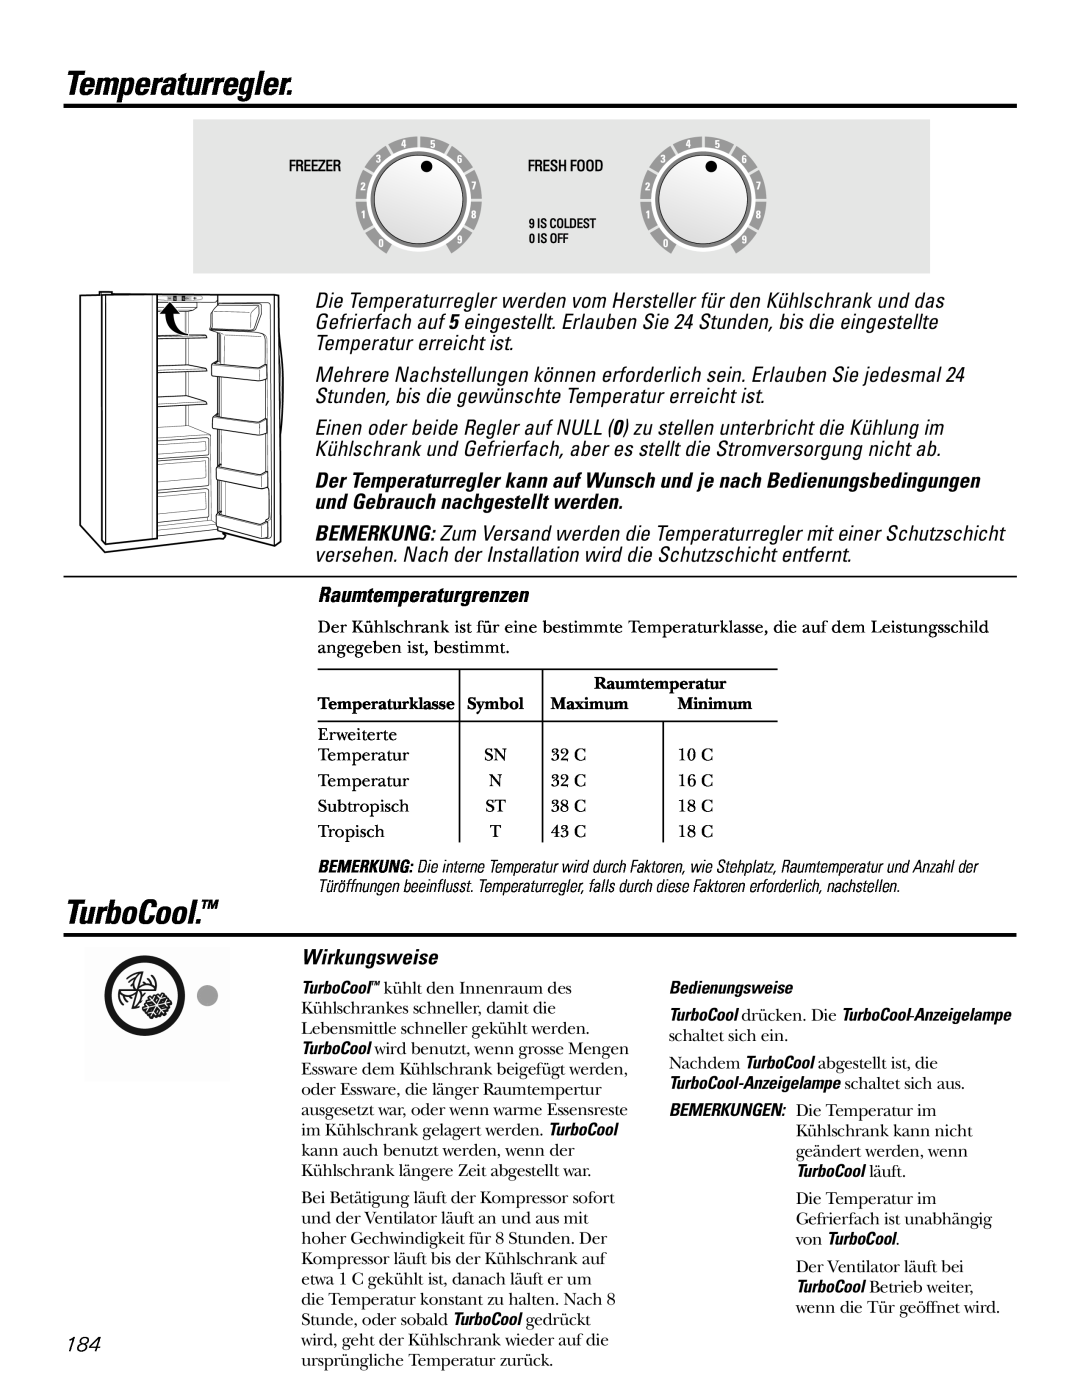 GE 200D2600P031 operating instructions Wirkungsweise, Temperaturregler, TurboCool, Raumtemperaturgrenzen, Bedienungsweise 